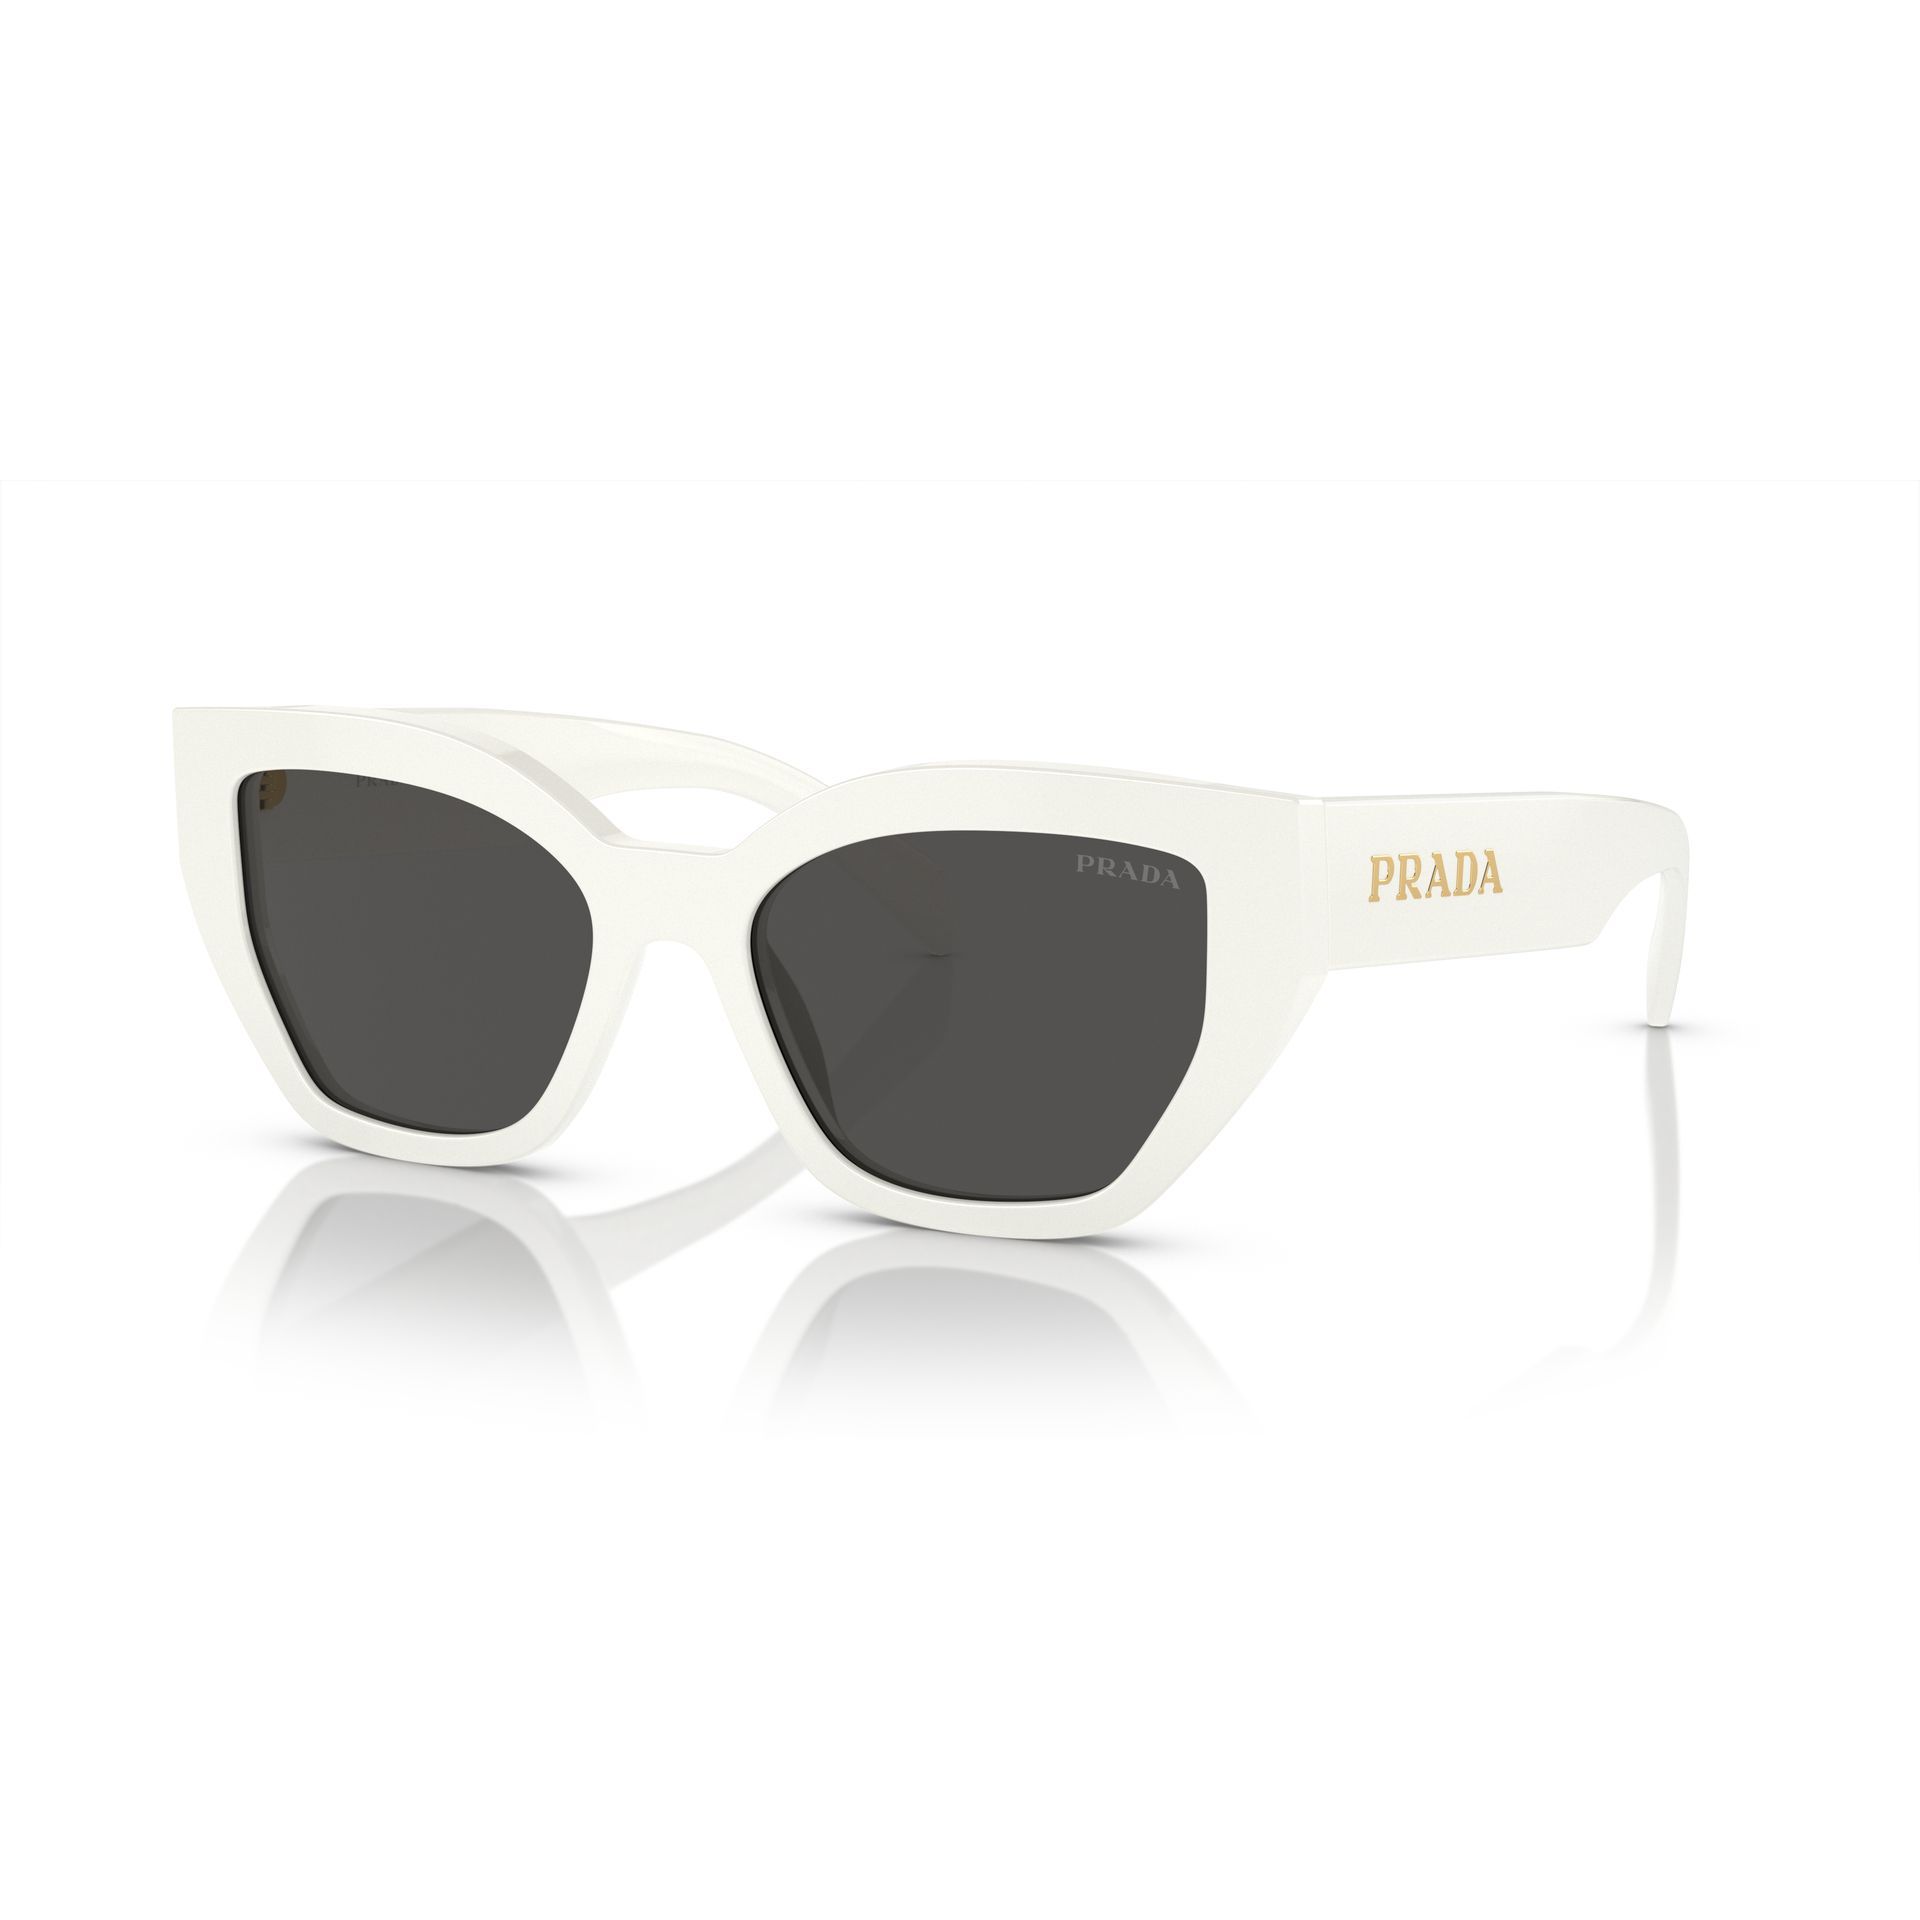 0PR A09S Cateye Sunglasses 1425S0 - size 53